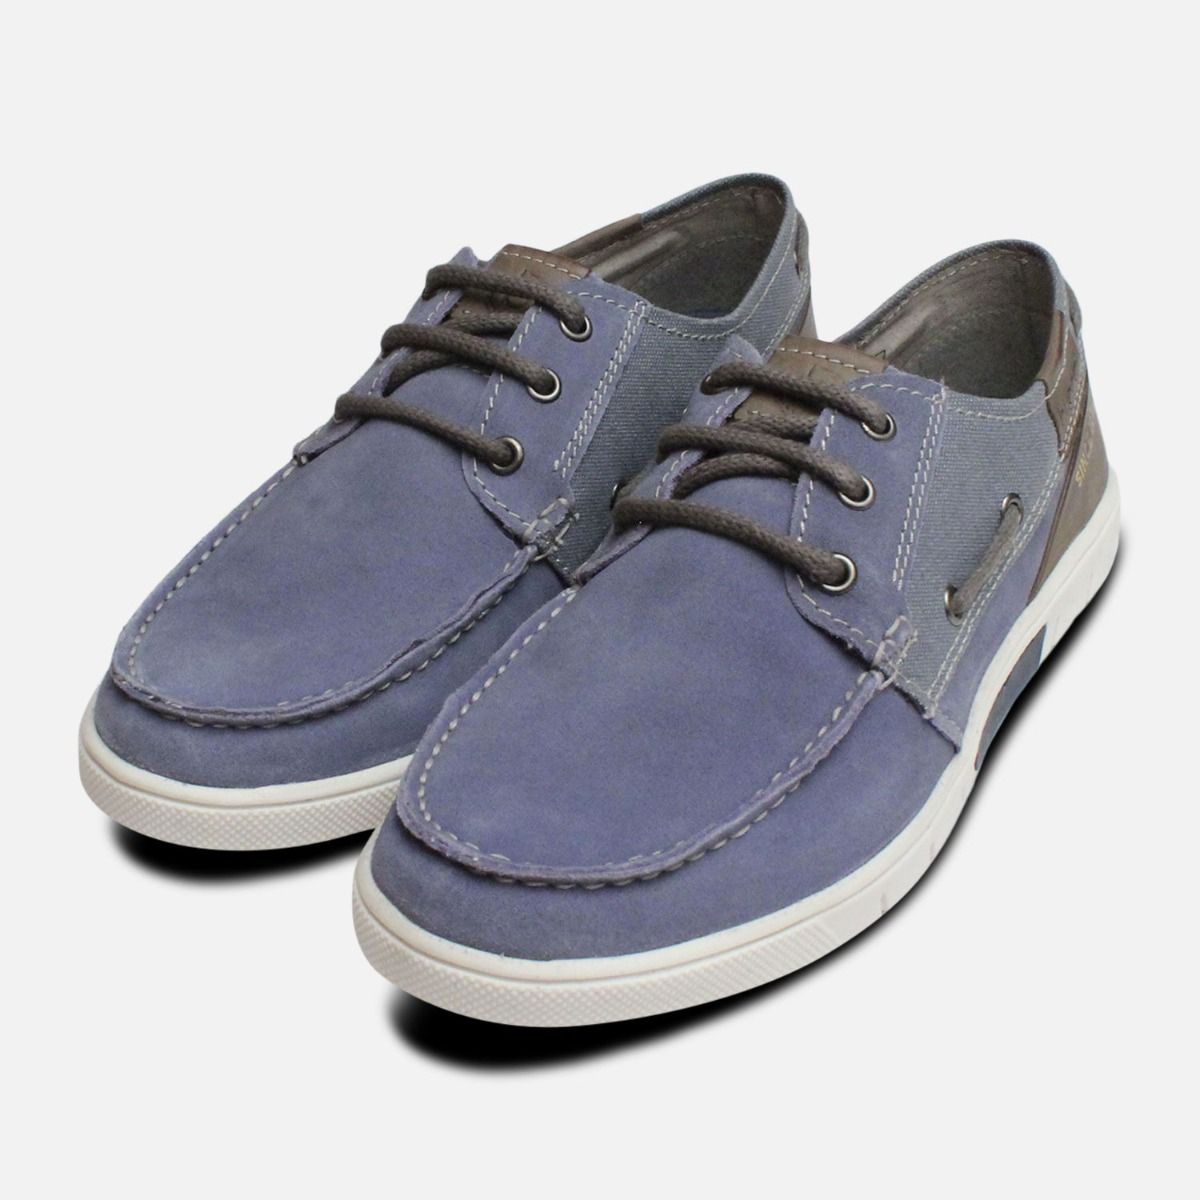 blue suede boat shoes mens